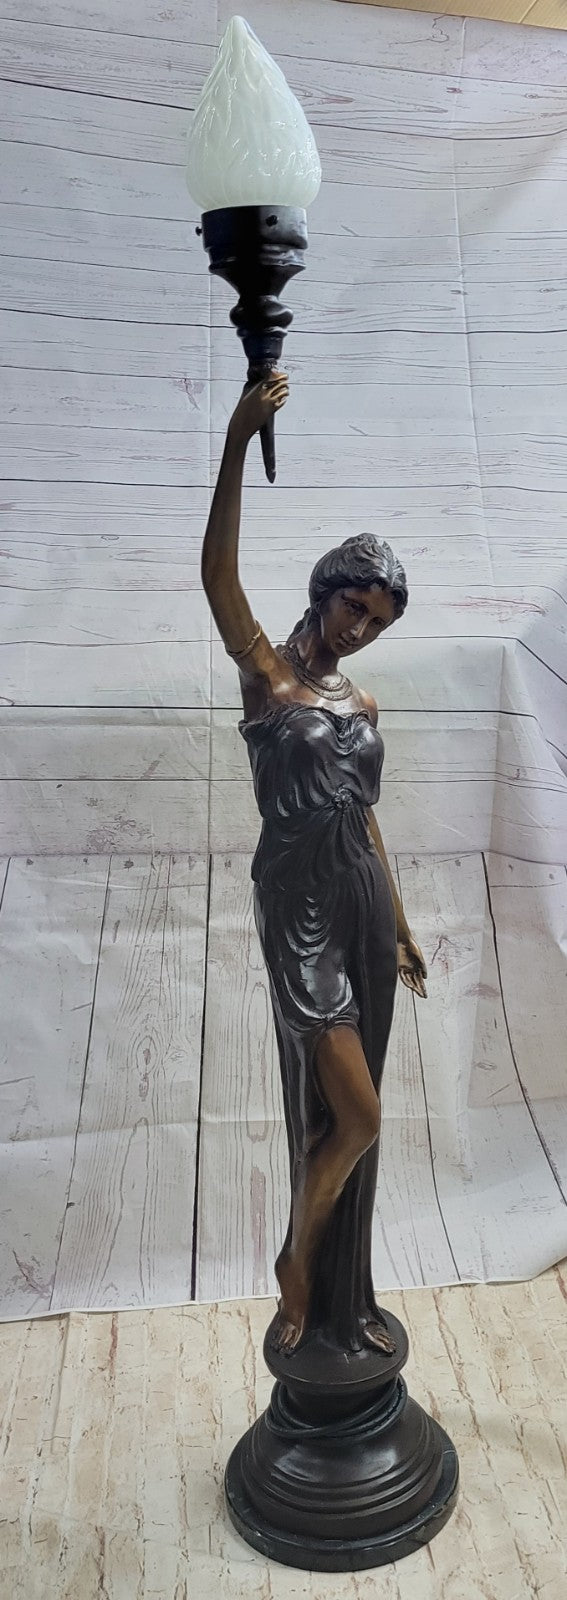 Art Deco/Nouveau Hot Cast Tall Woman French Lamp Bronze Sculpture Statue Deal